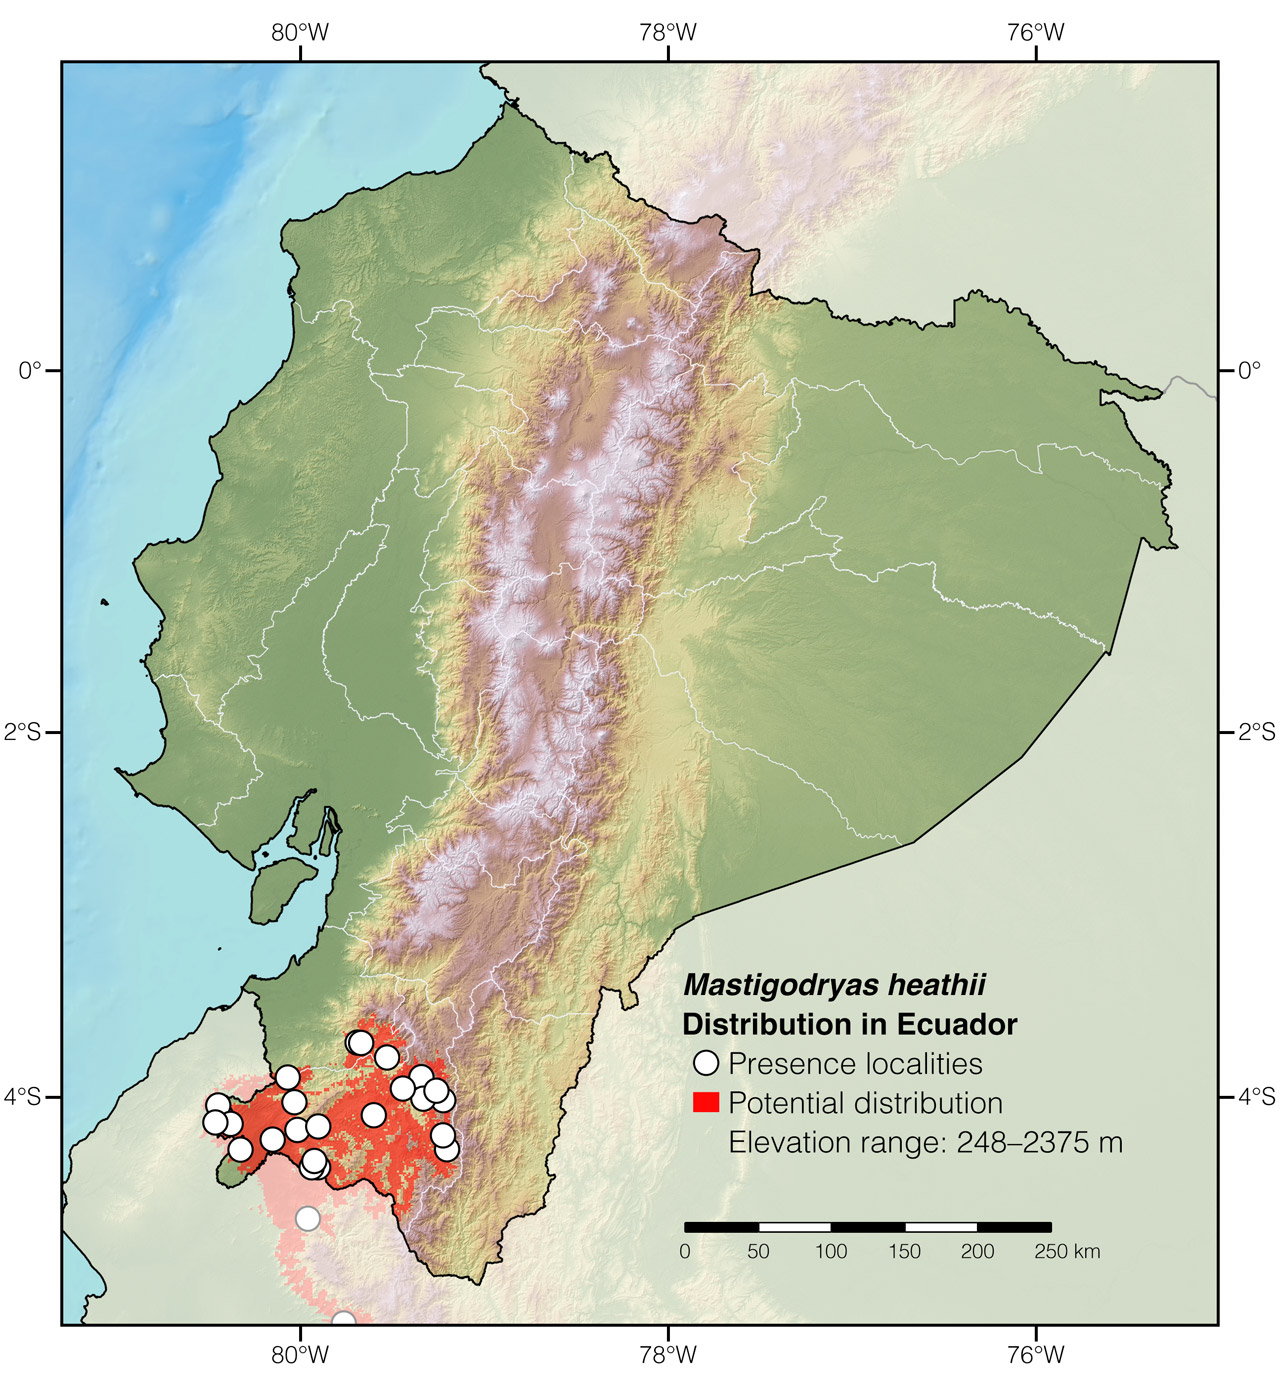 Distribution of Mastigodryas heathii in Ecuador